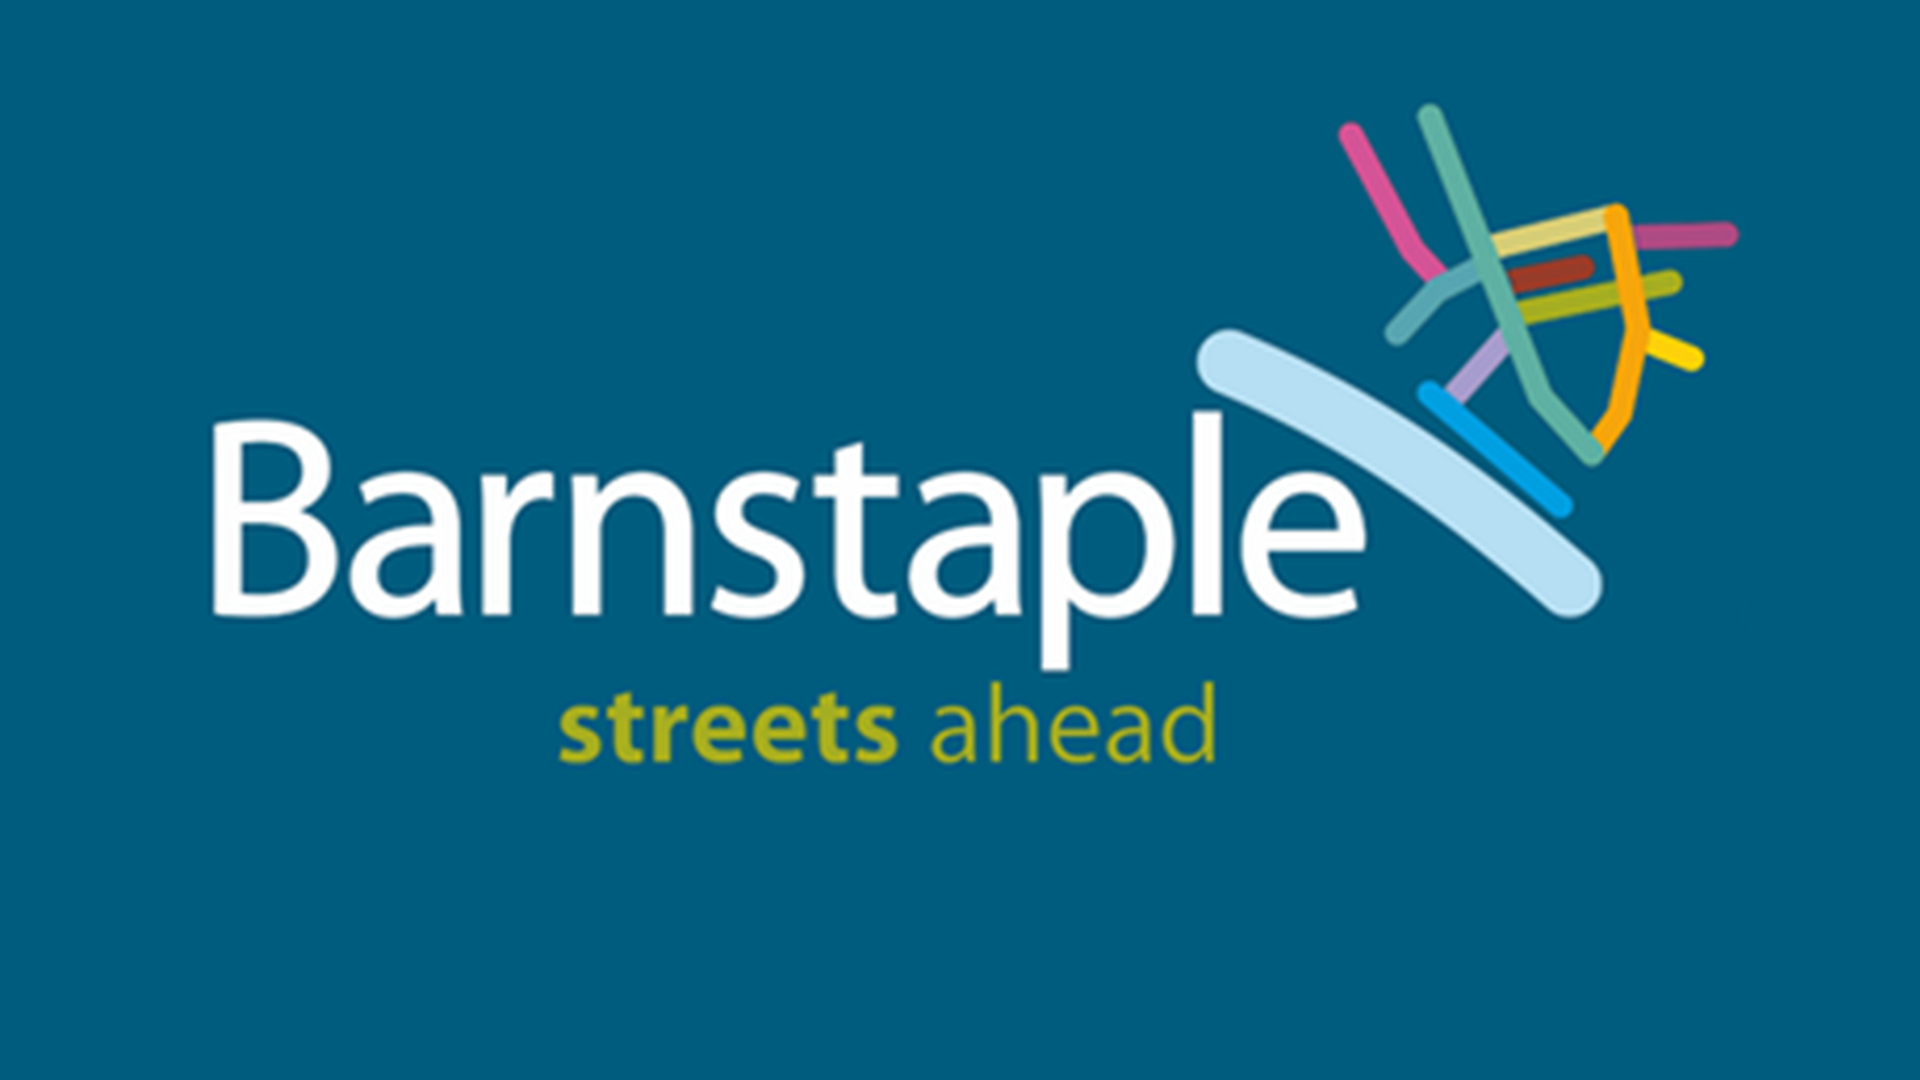 Le logo Barnstaple, l'un des pires logos